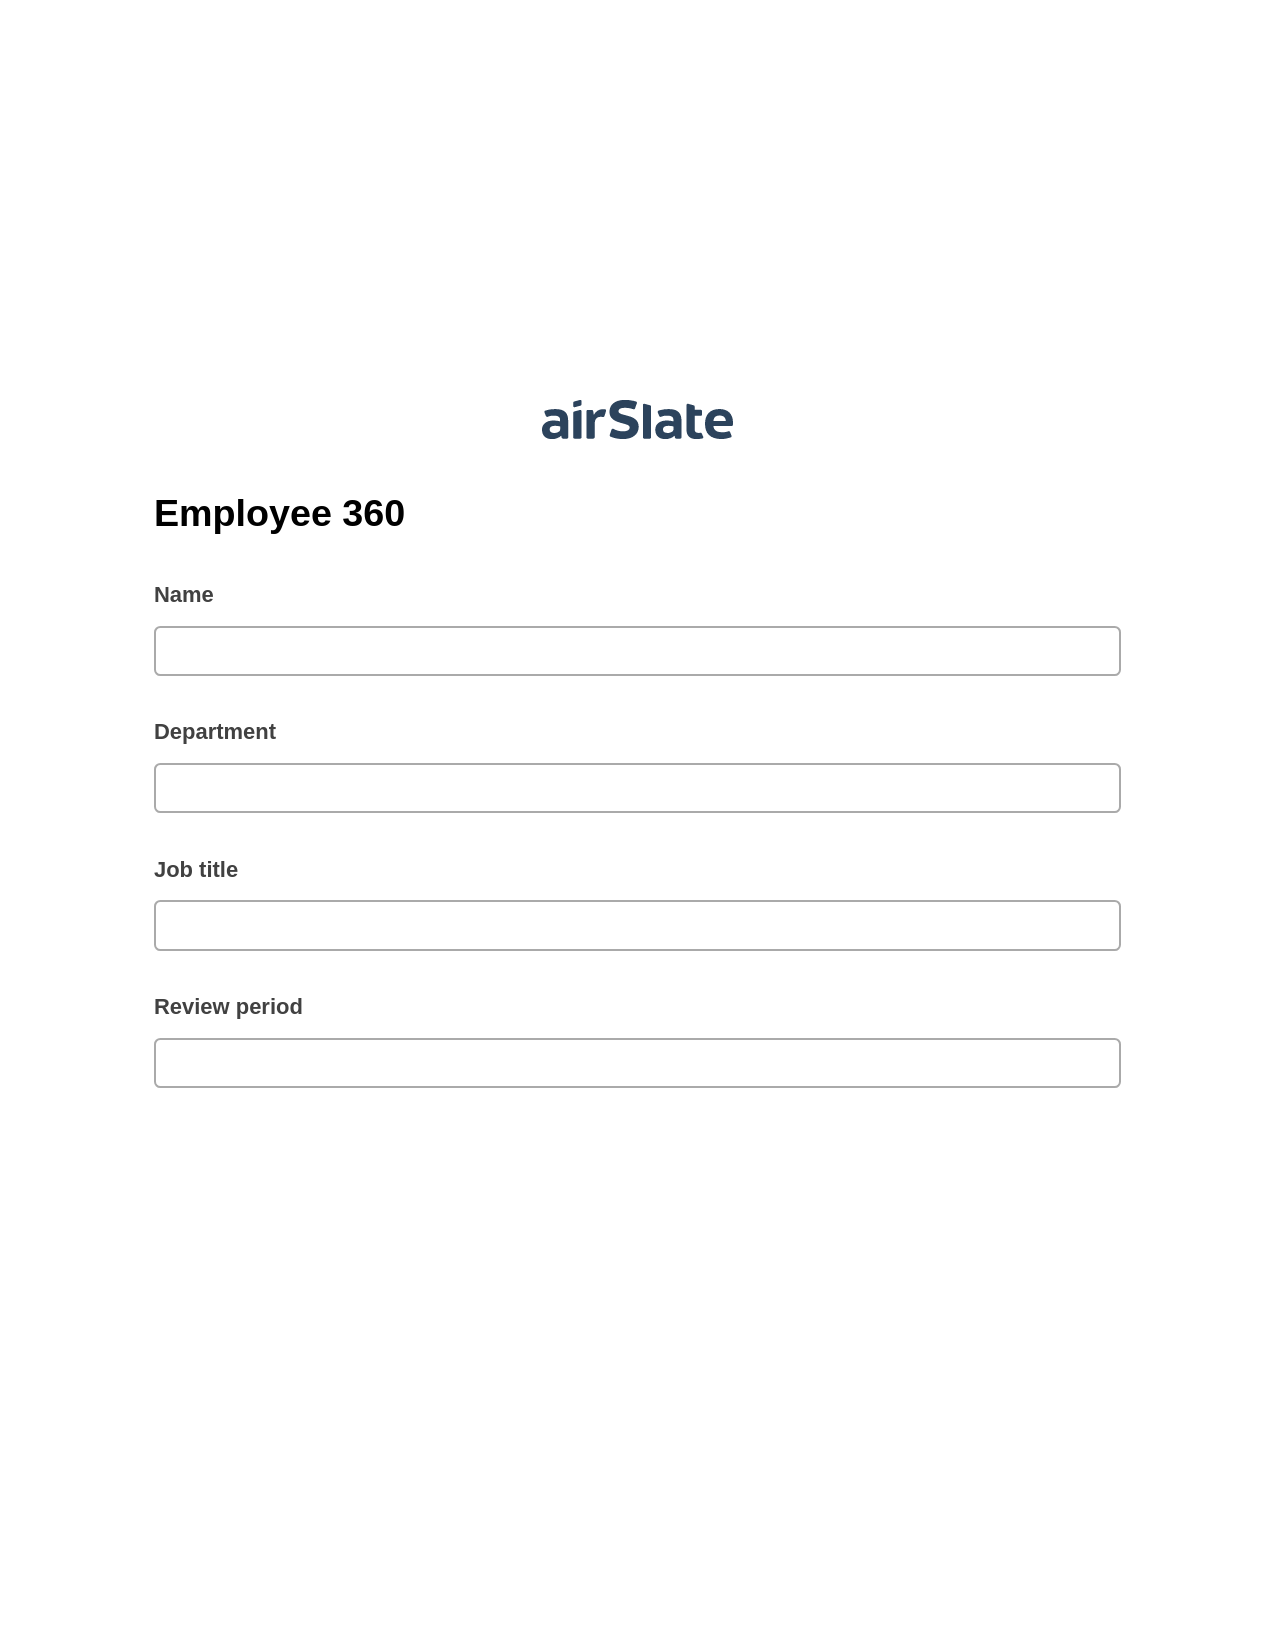 Employee 360 Pre-fill from MySQL Bot, Lock the Slate Bot, Export to WebMerge Bot